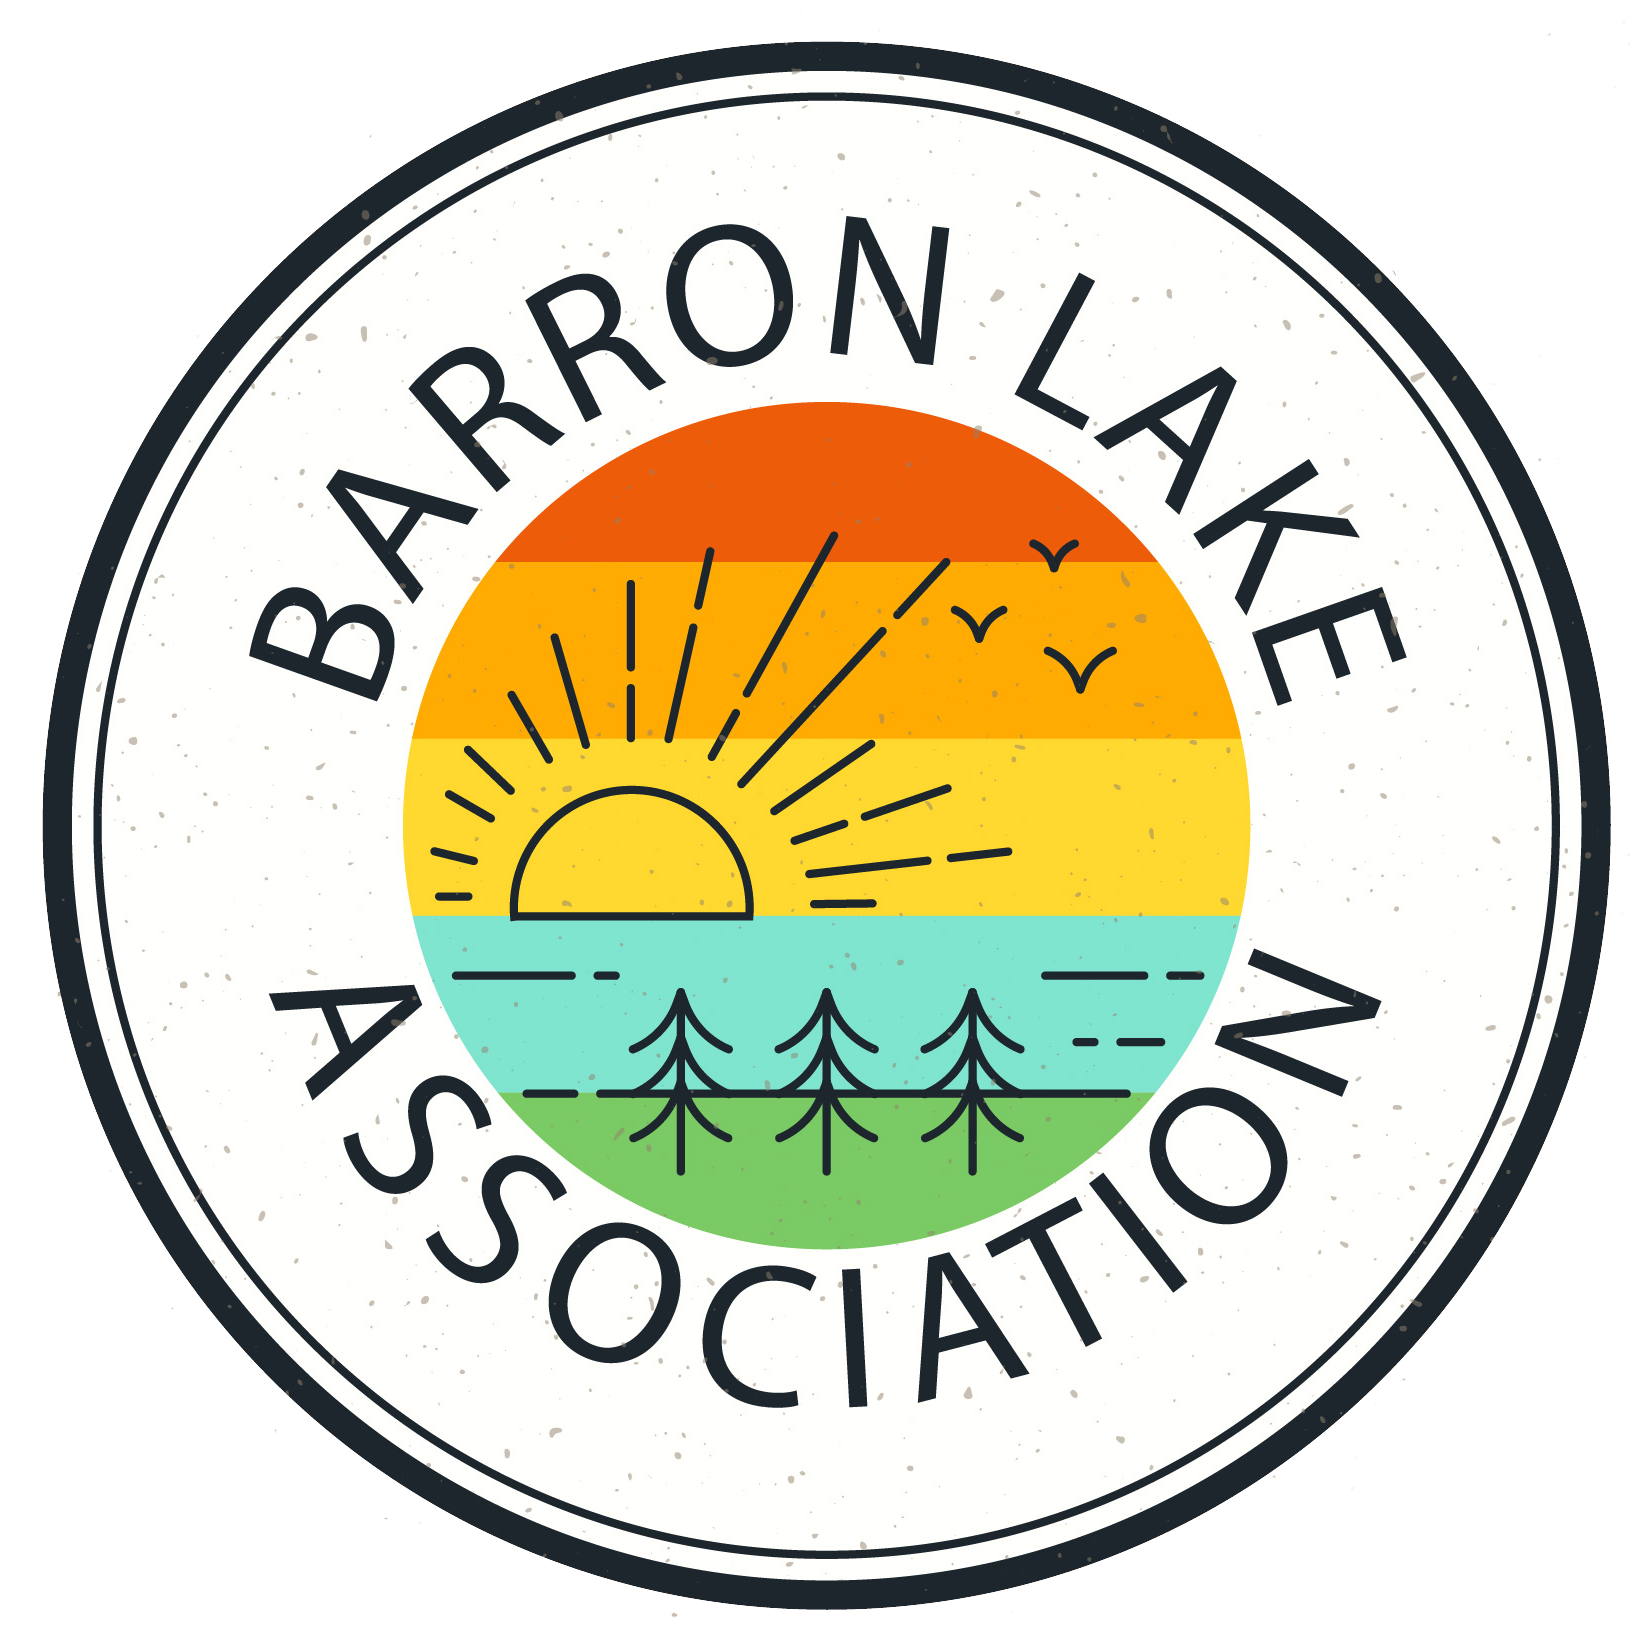 Barron Lake Association